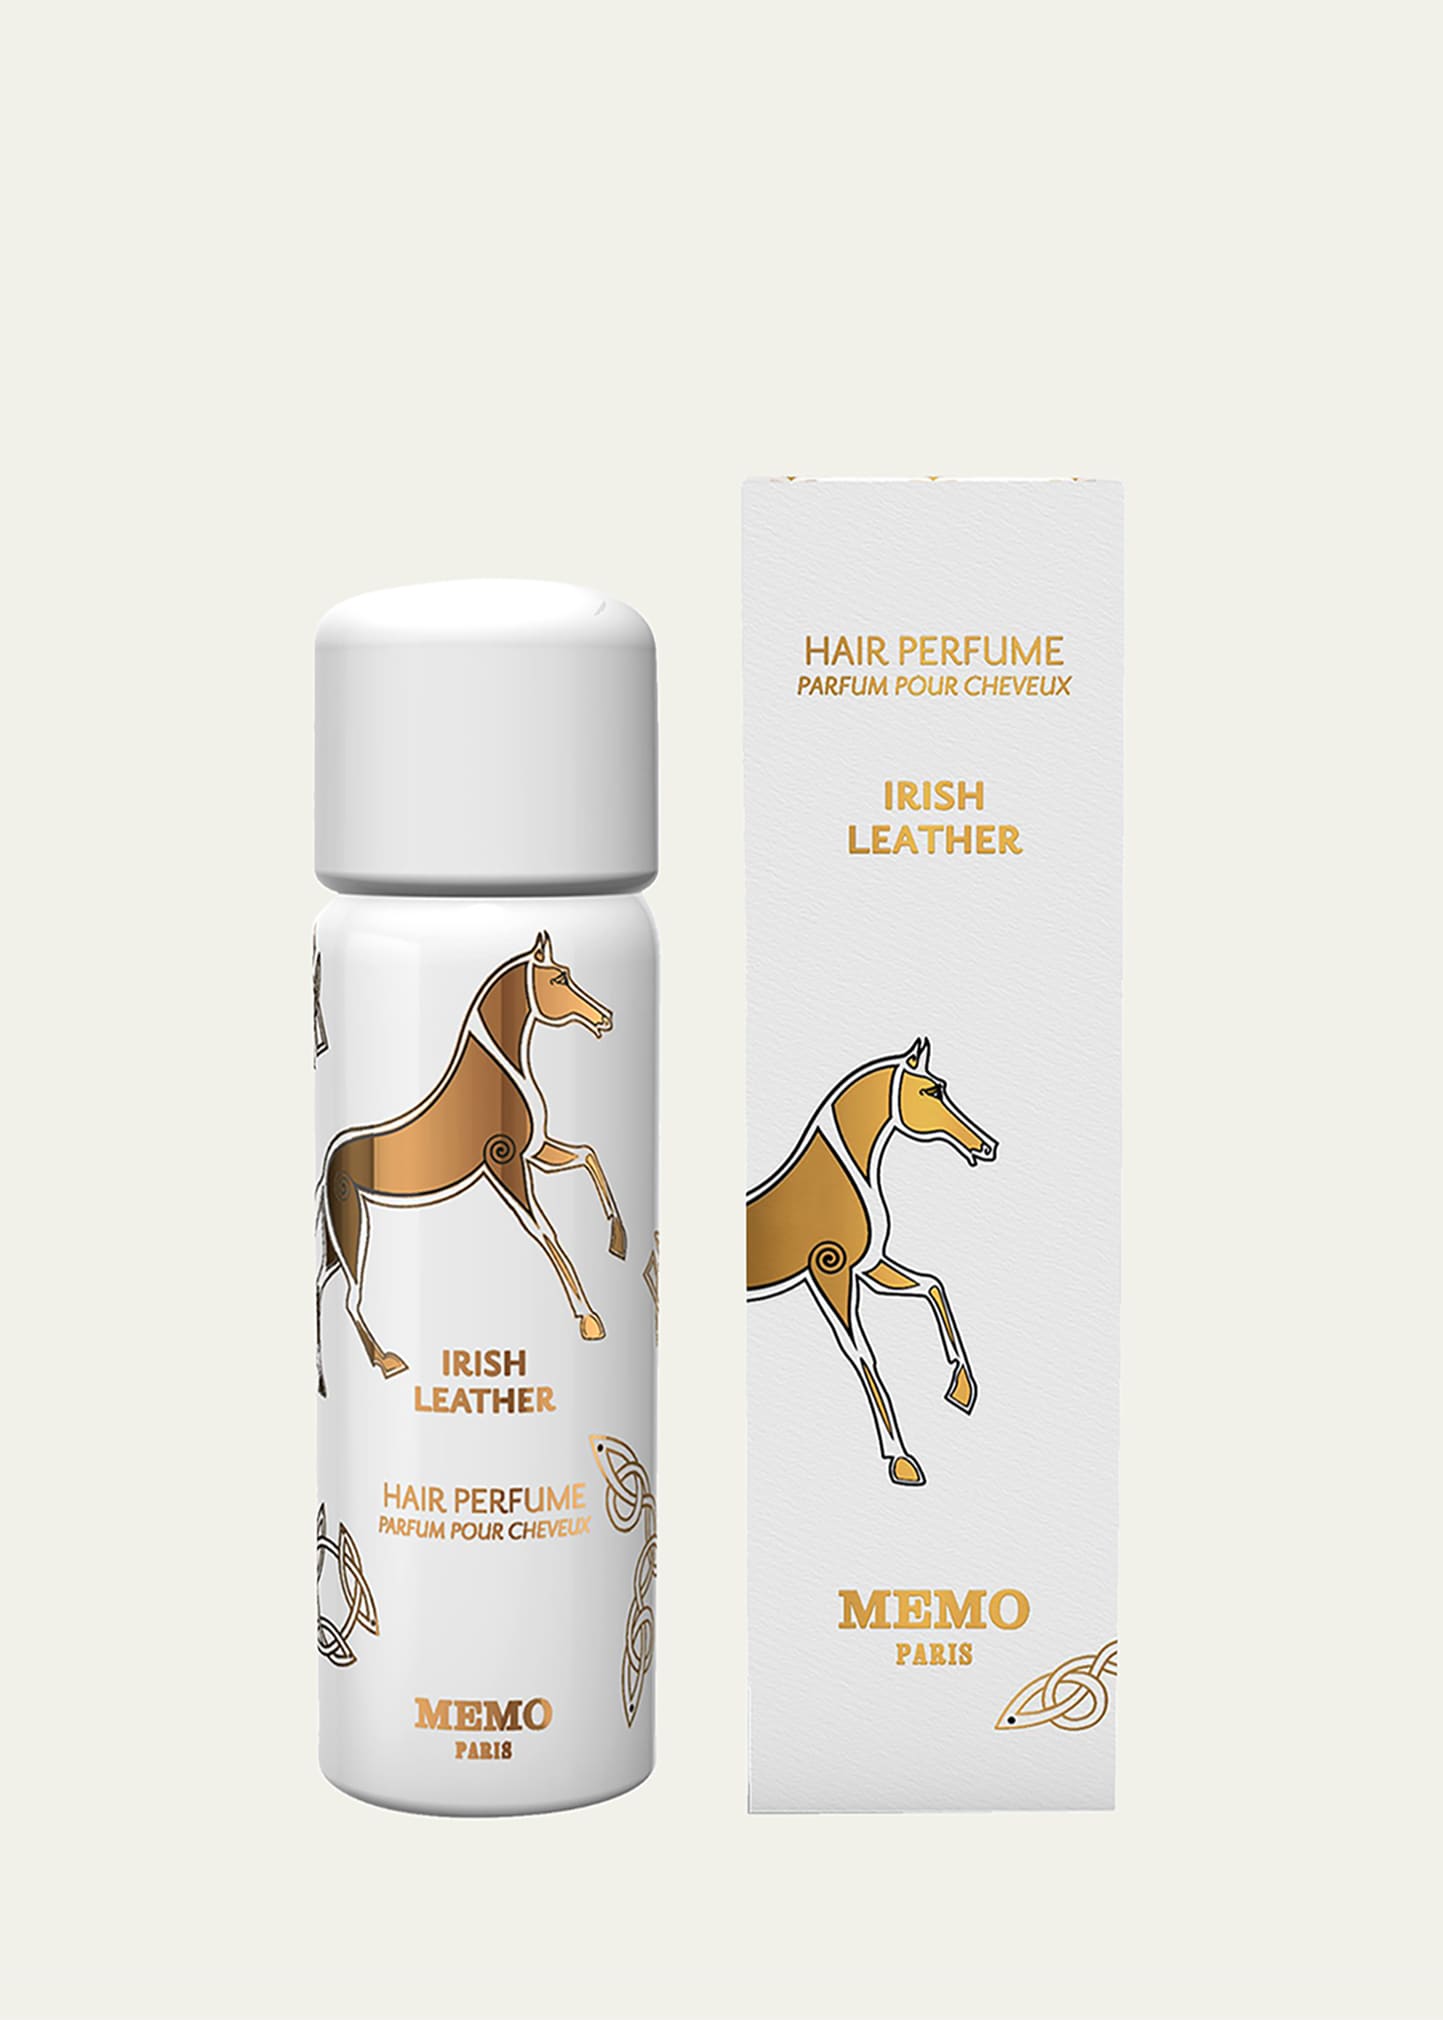 Memo Paris Hair Perfume Irish Leather, 2.7 oz./ 80 mL